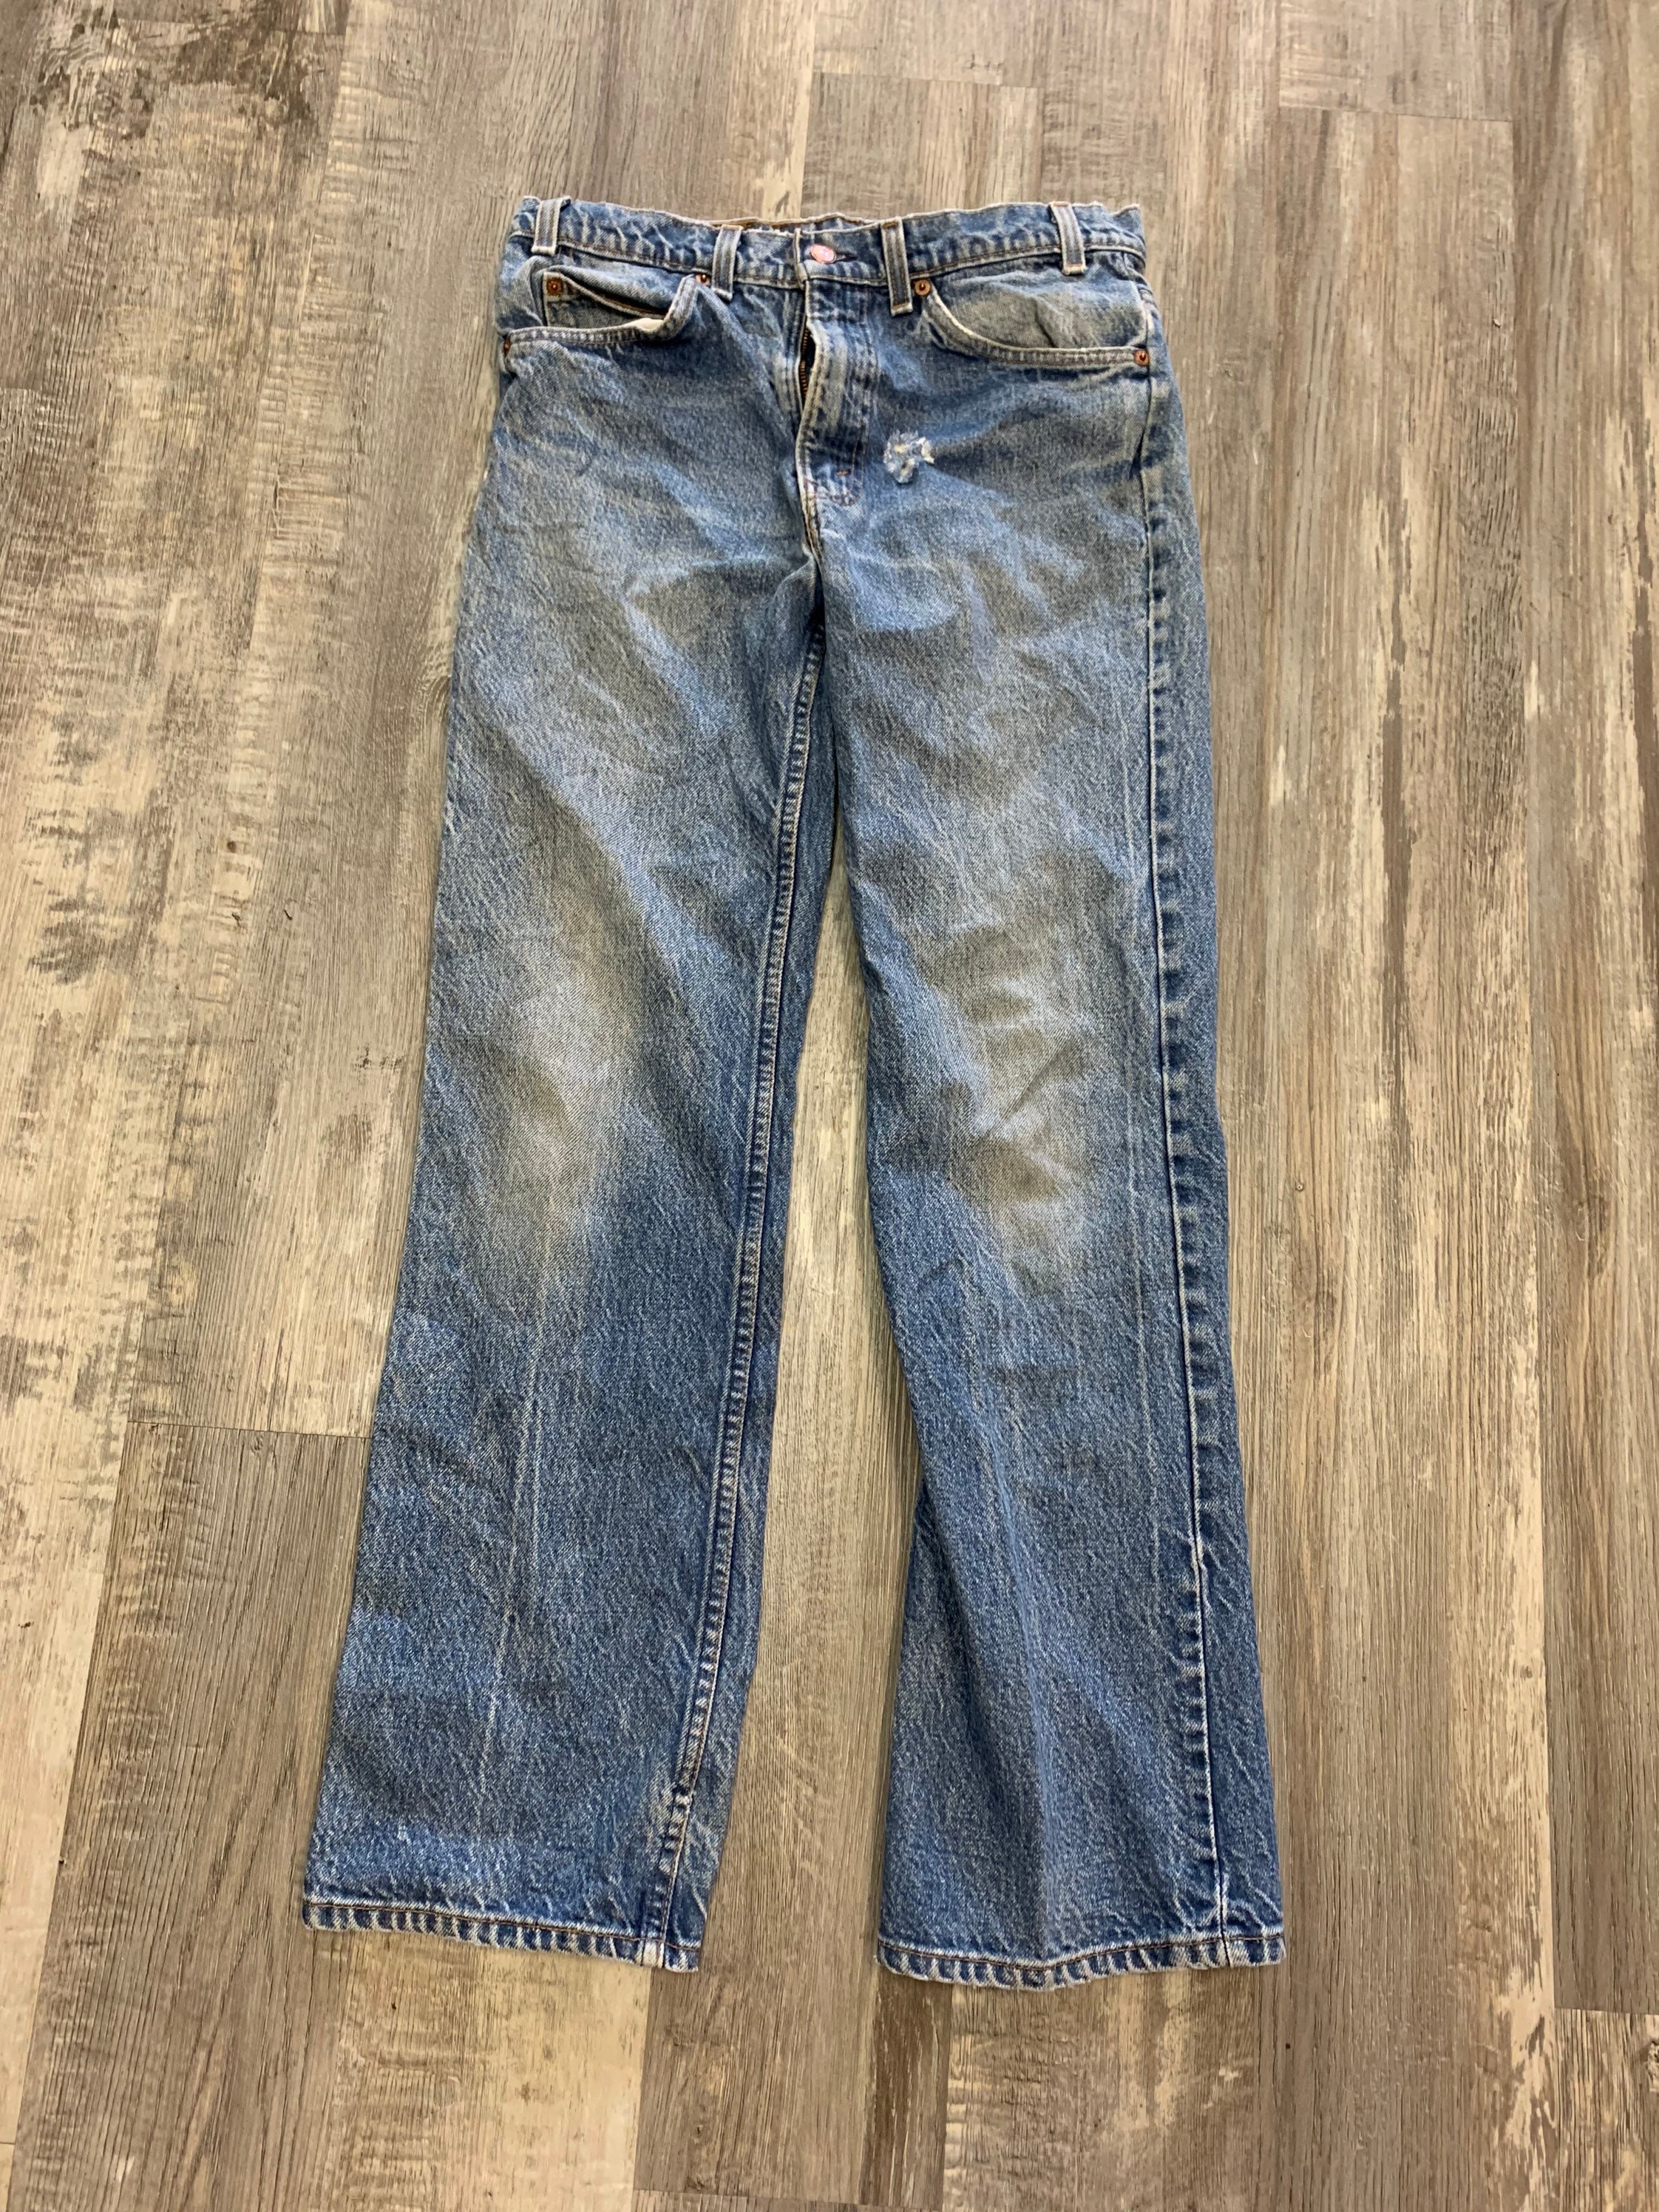 Vintage Levis Jeans Size 32x30 1990s - Etsy Israel